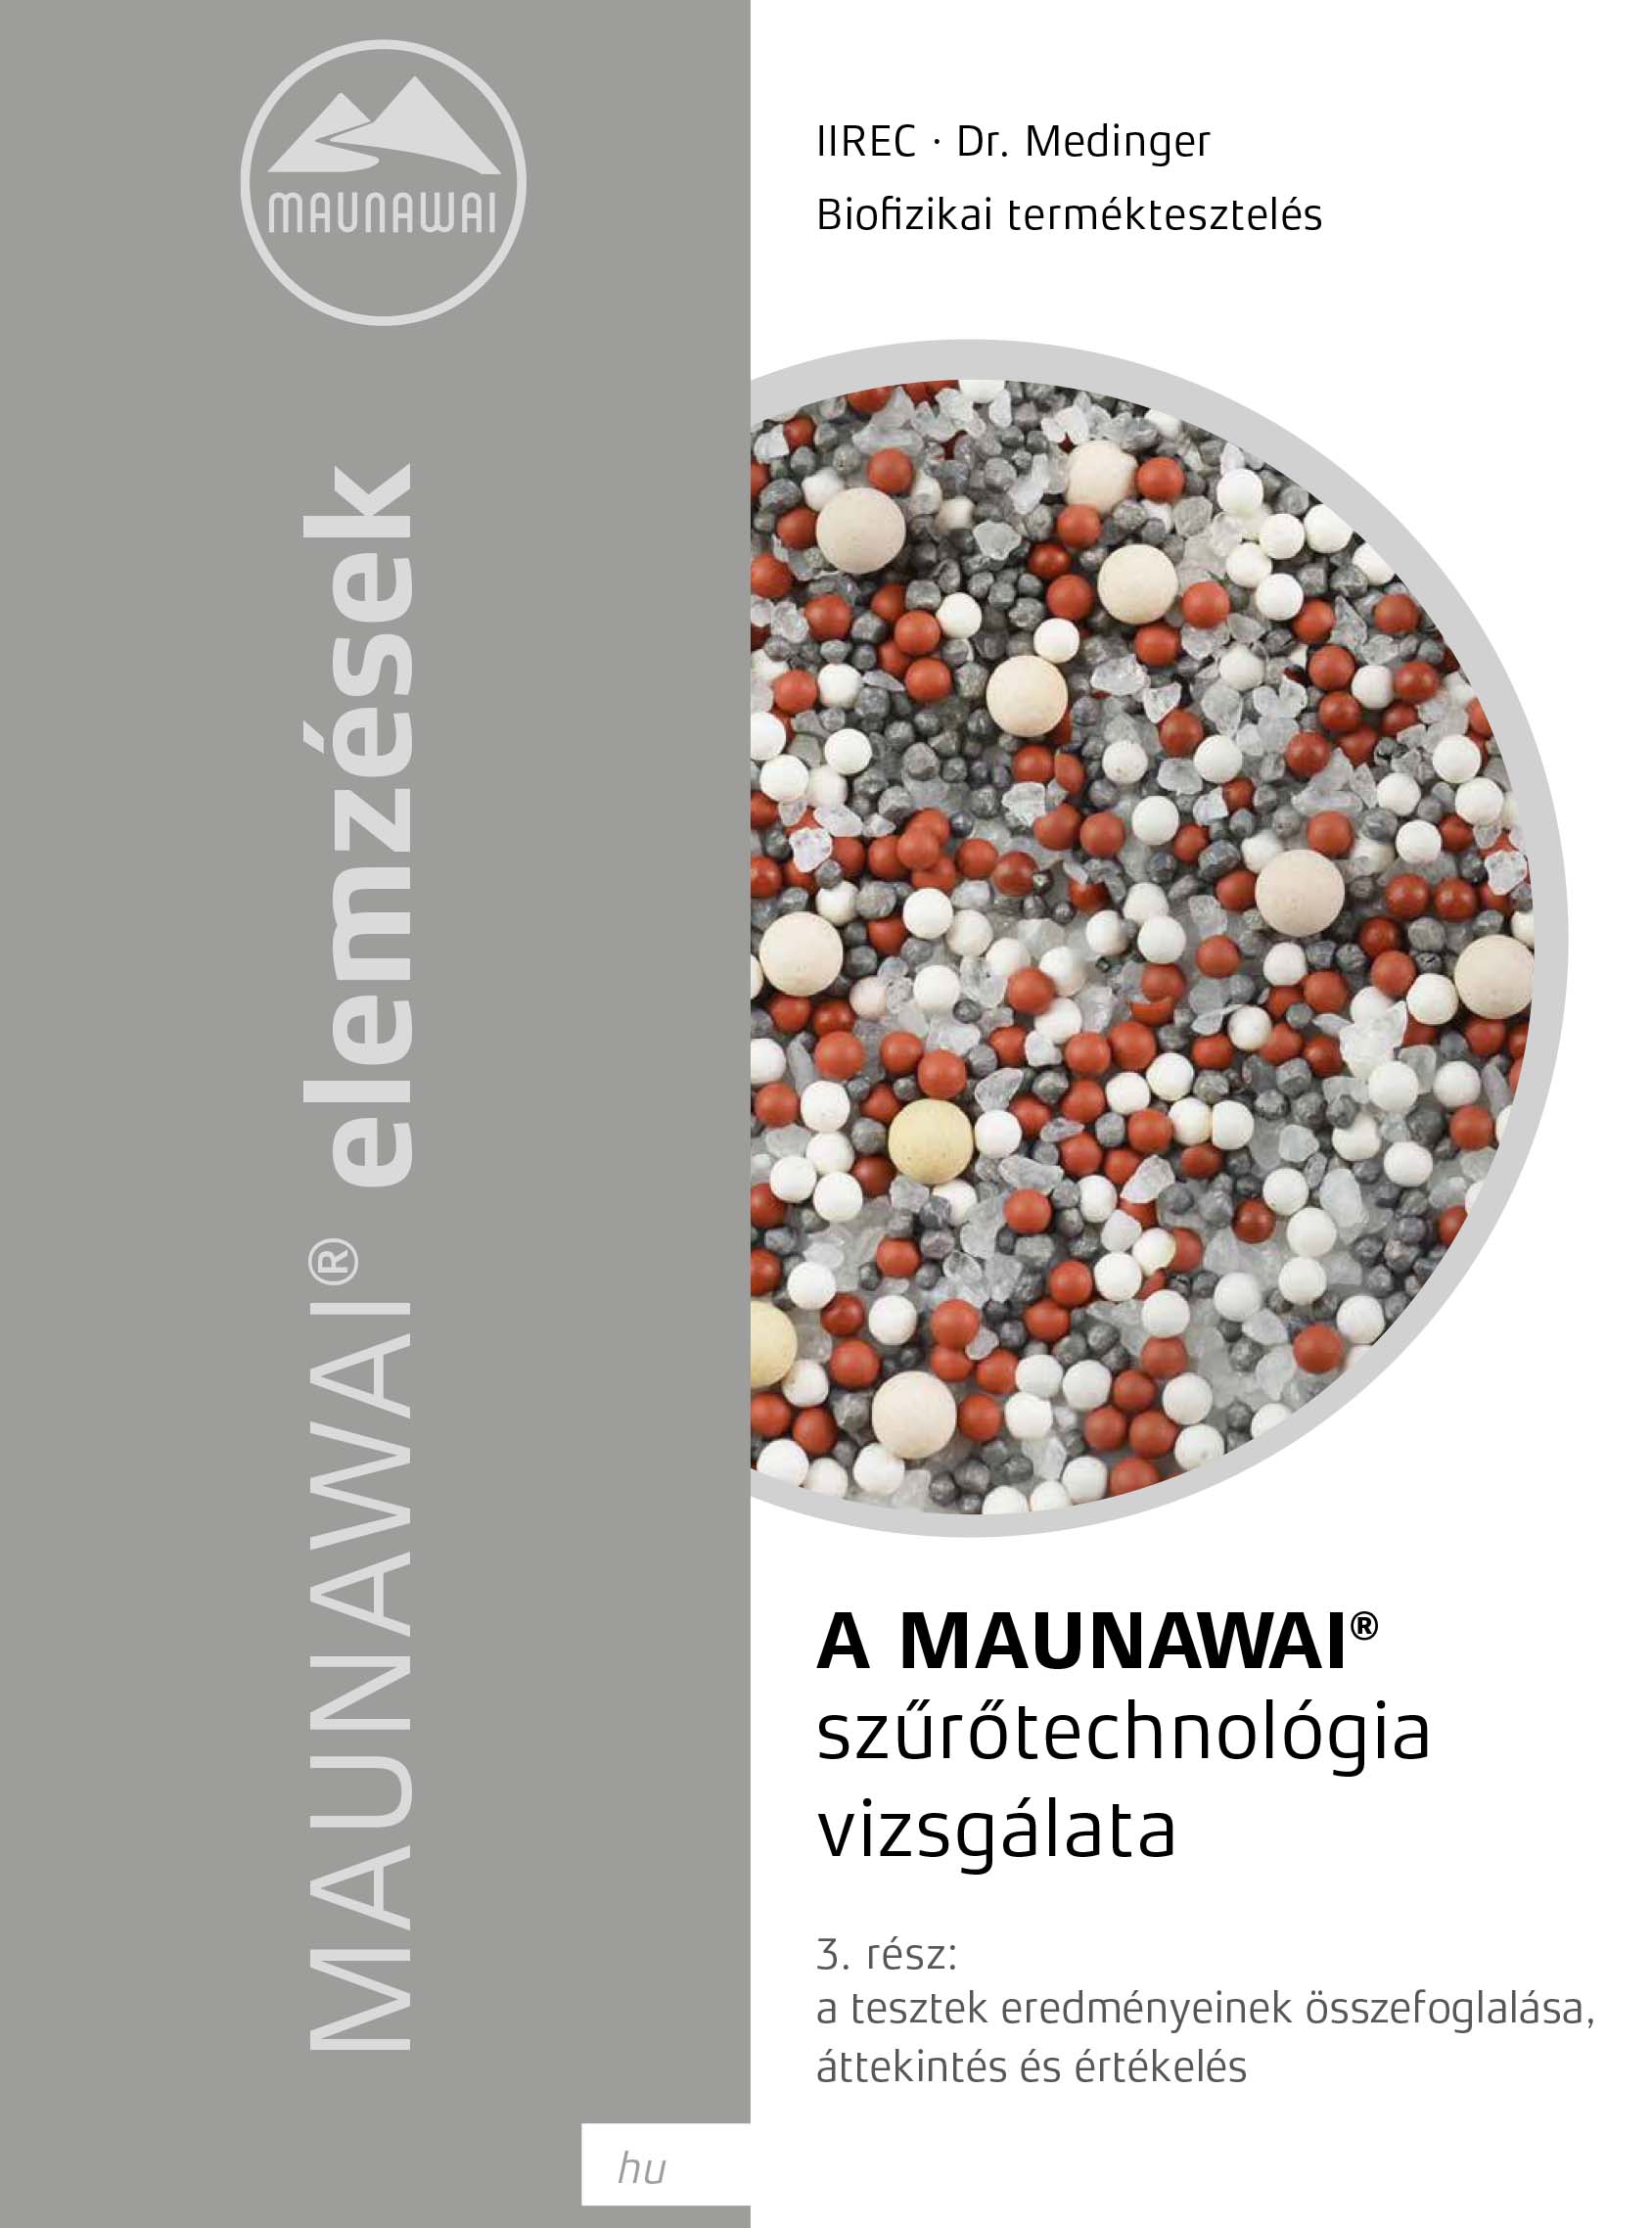 Maunawai szurovizsgalati eredmenyek_2017_forma-1.jpg